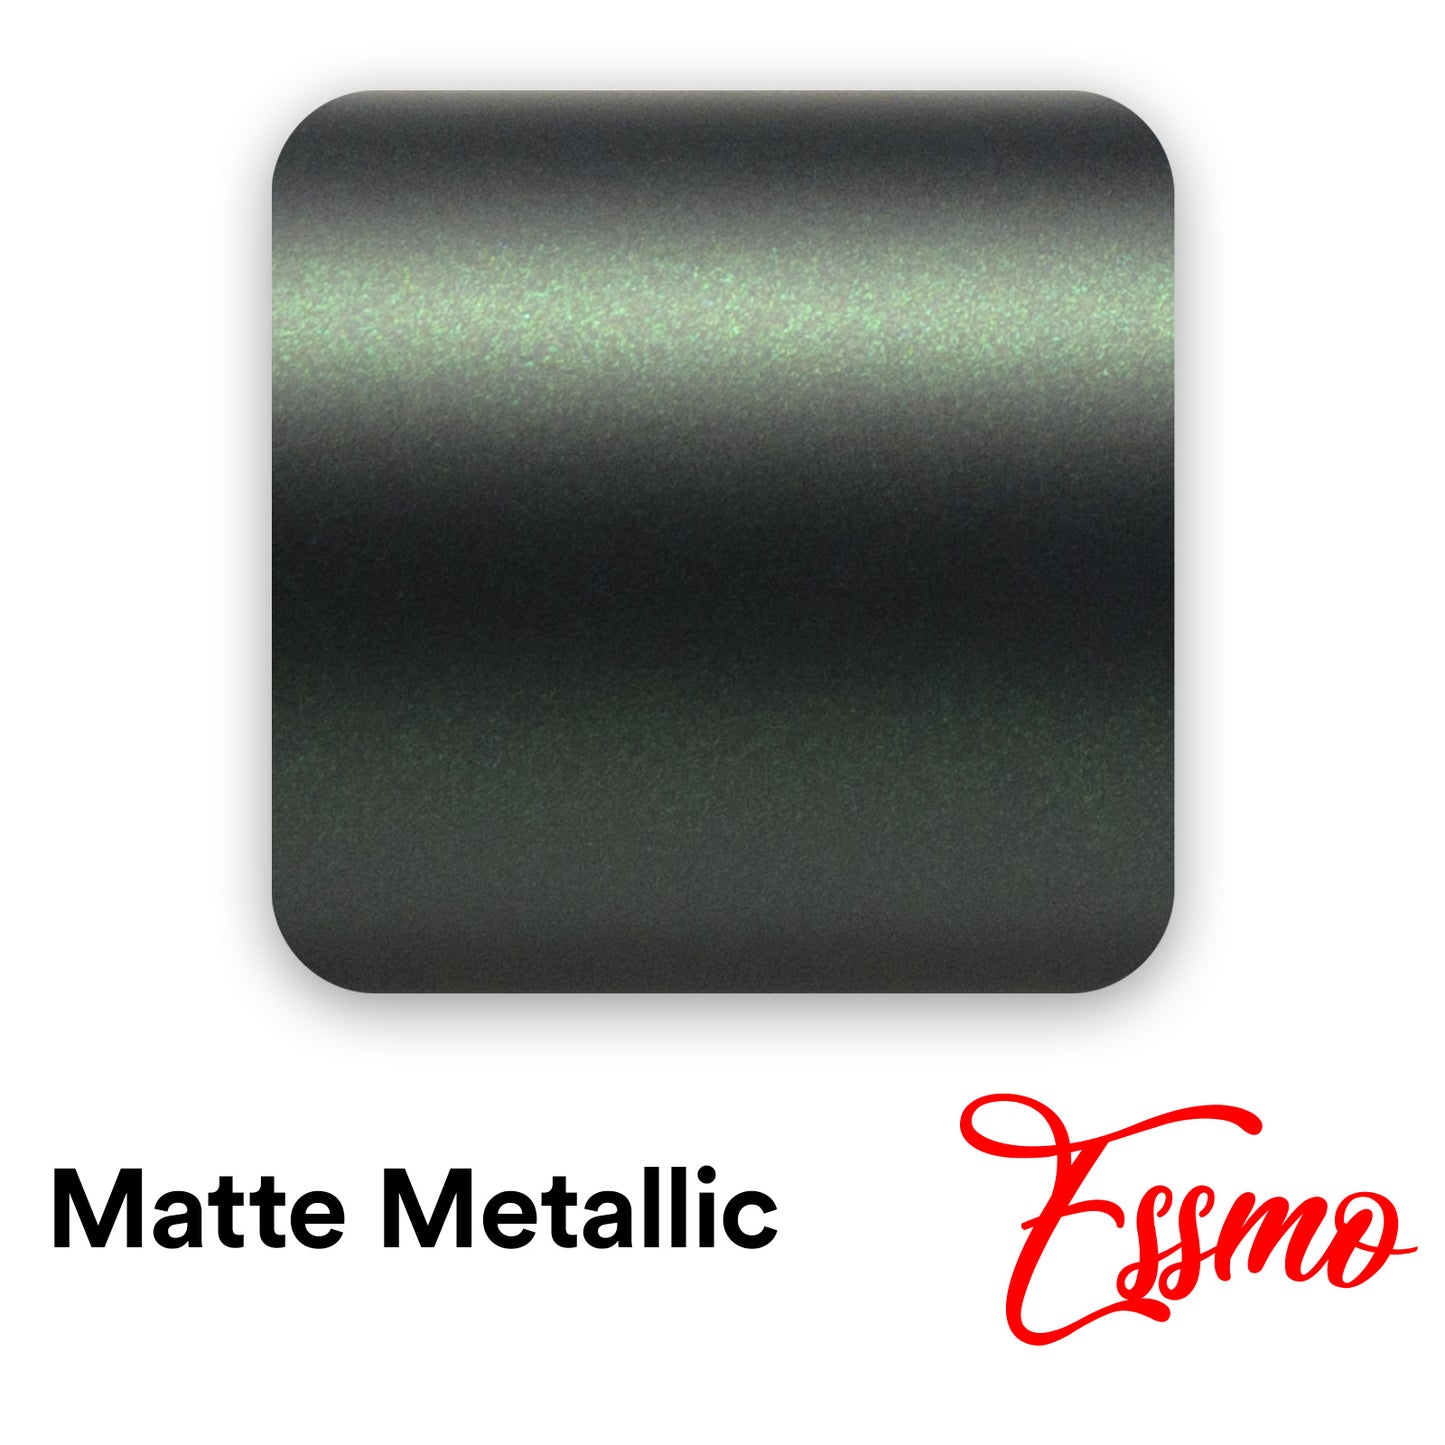 Matte Metallic Wizard Green Vinyl Wrap